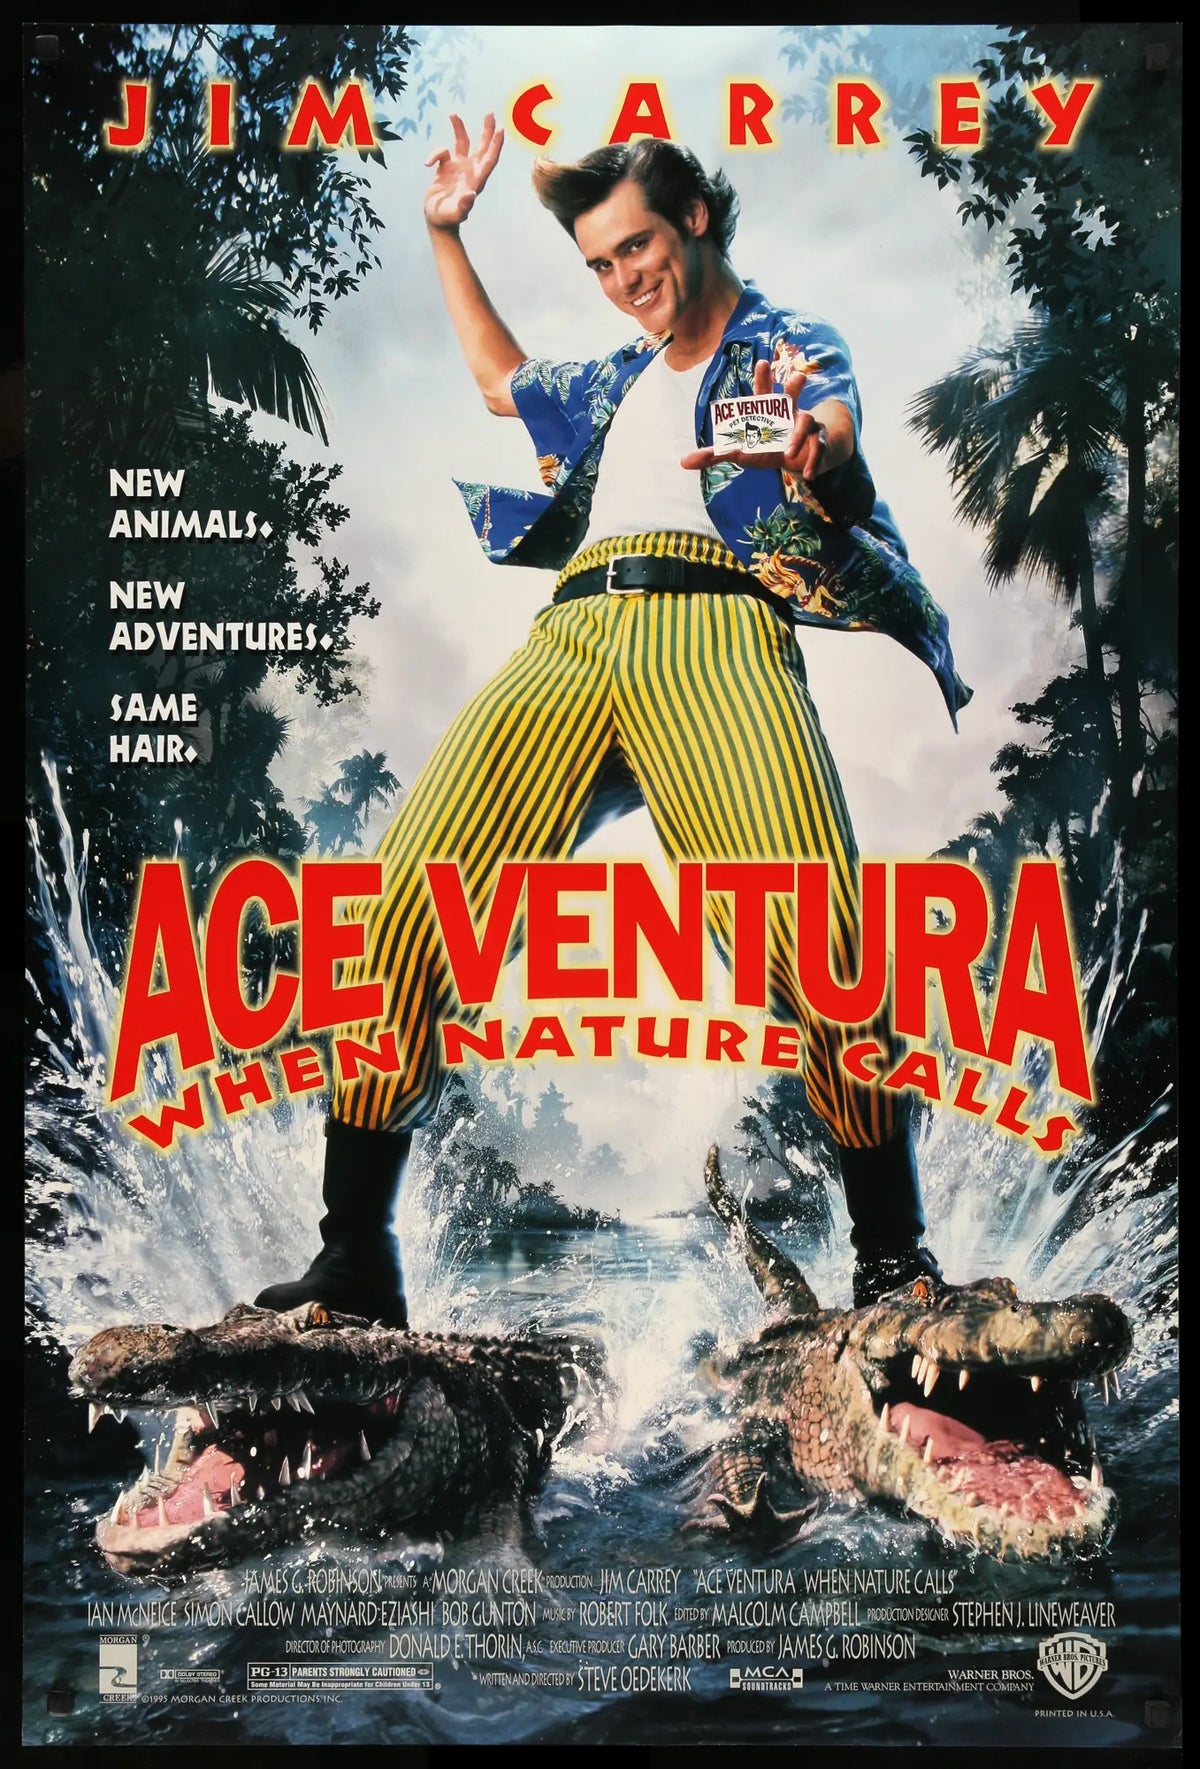 Ace Ventura - When Nature Calls (1995) original movie poster for sale at Original Film Art